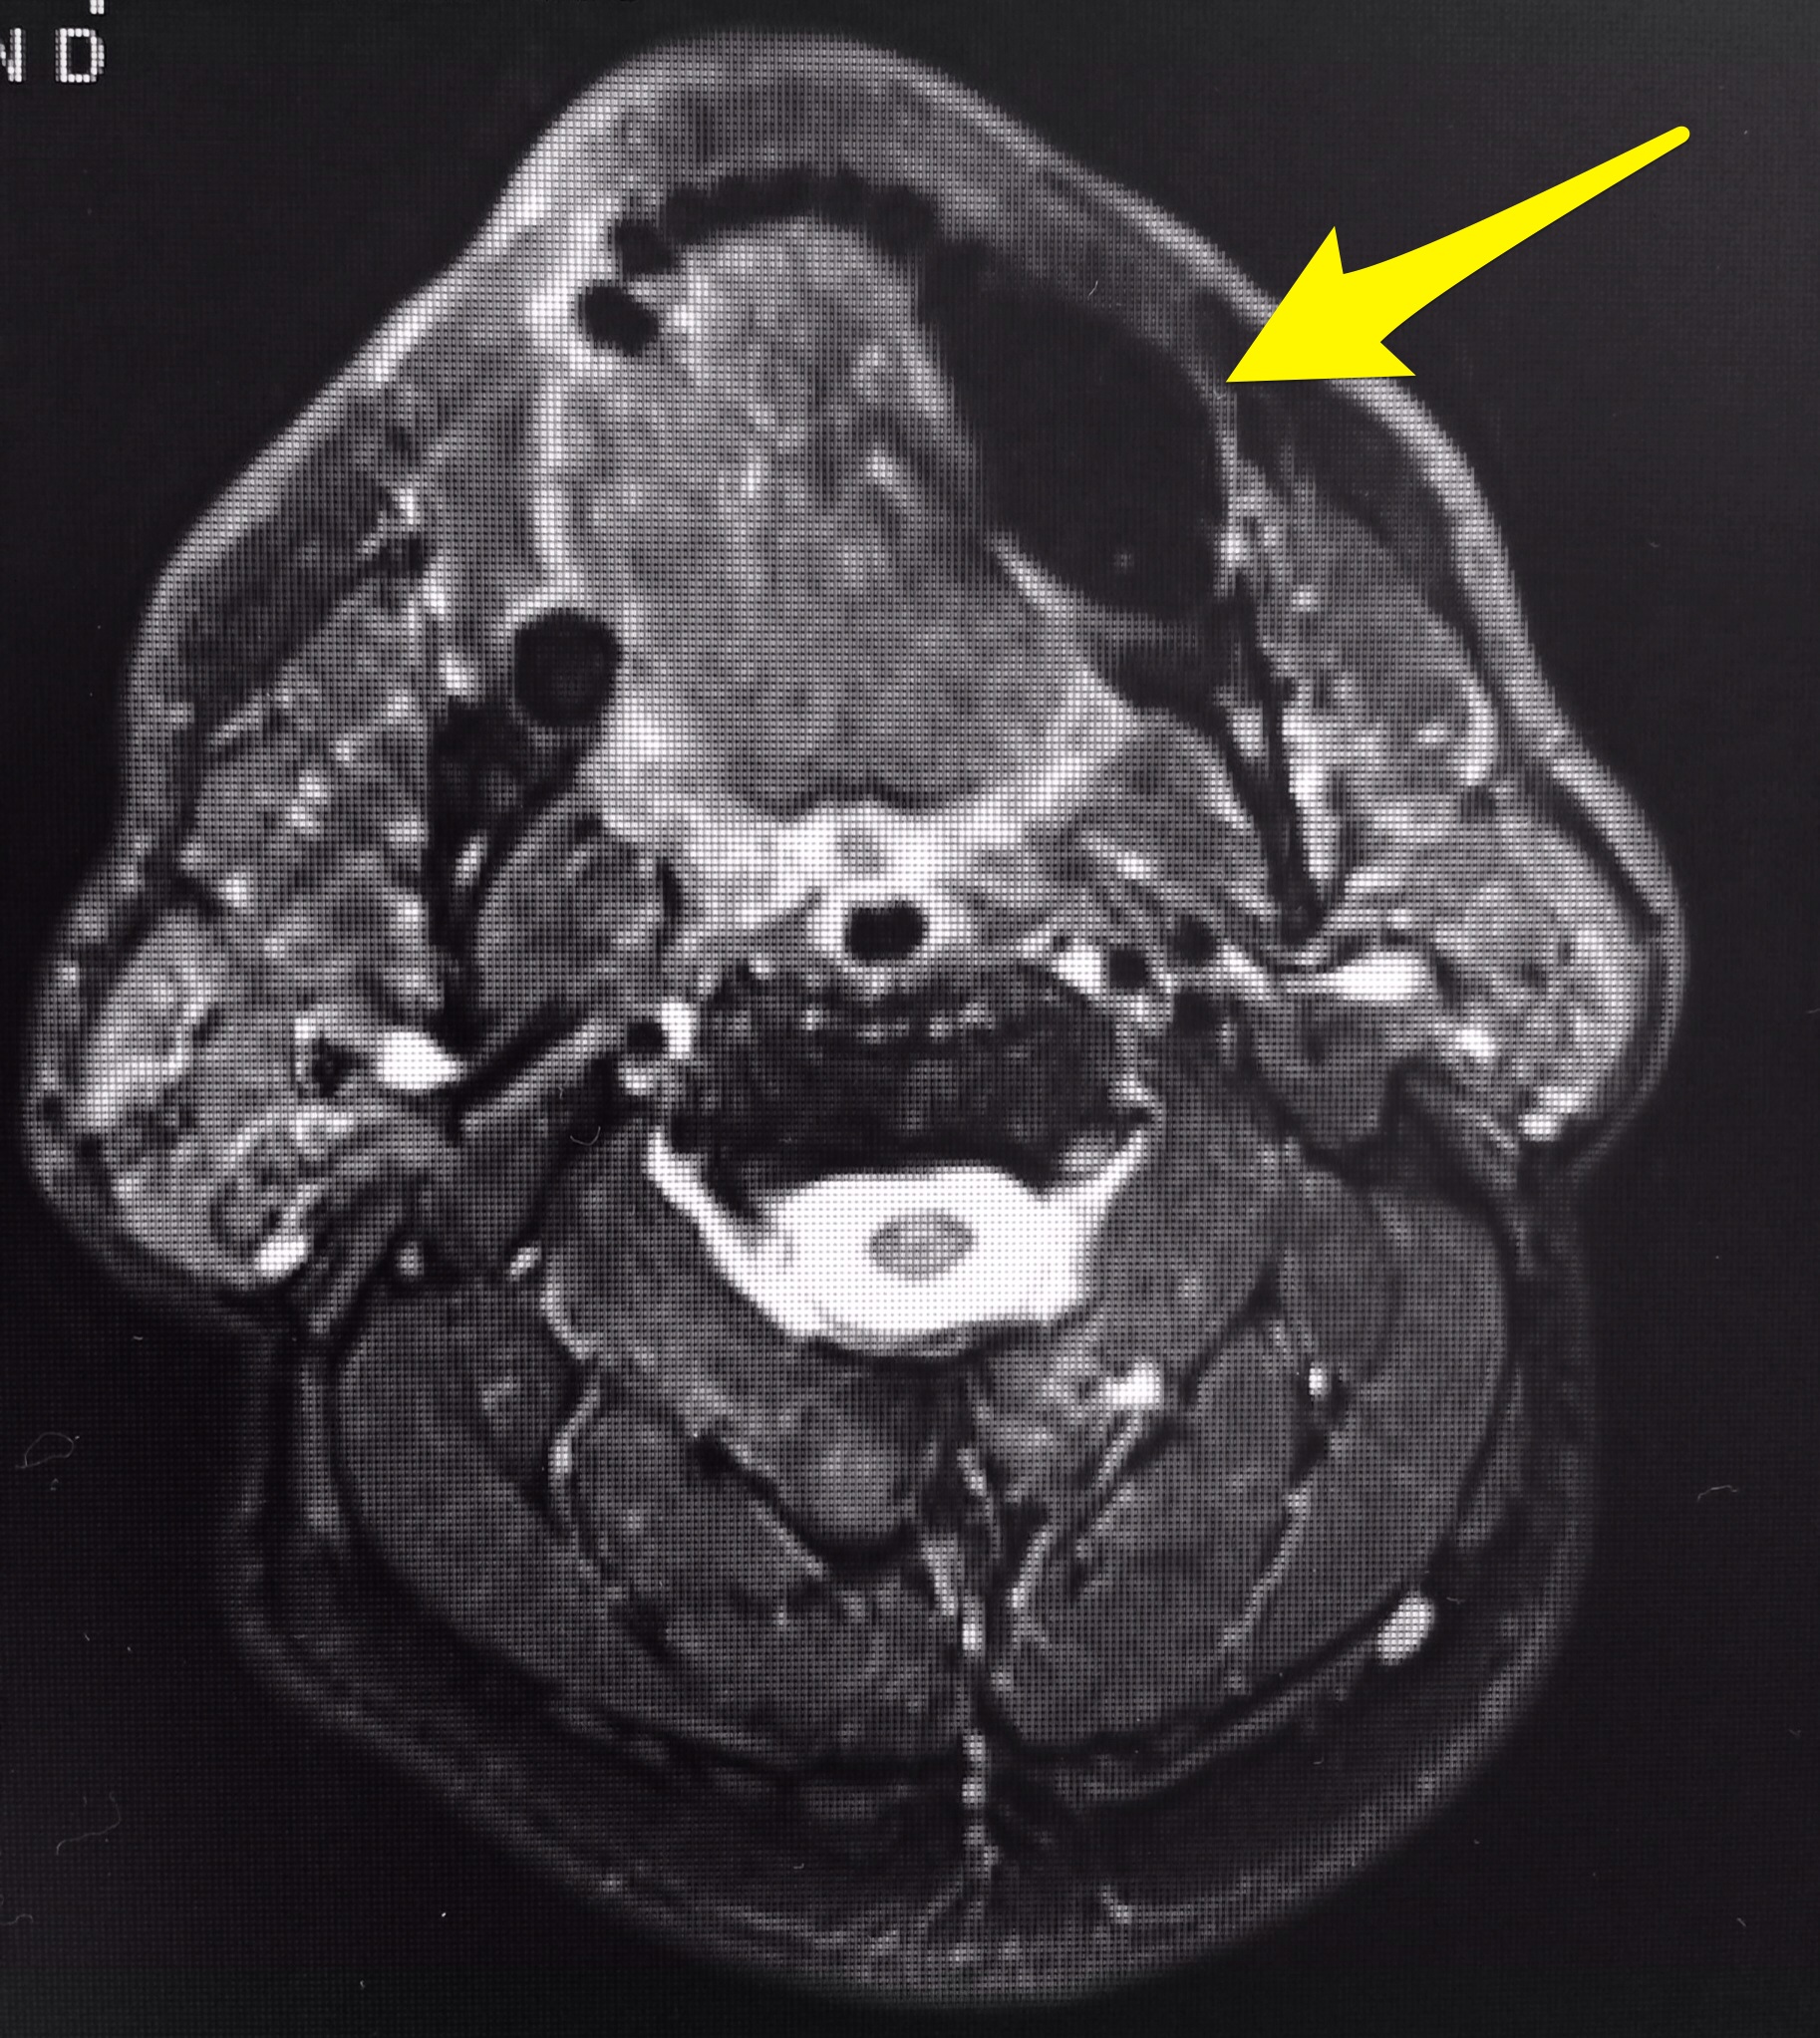 MRI image of a lipoma under the mandible (jawbone)